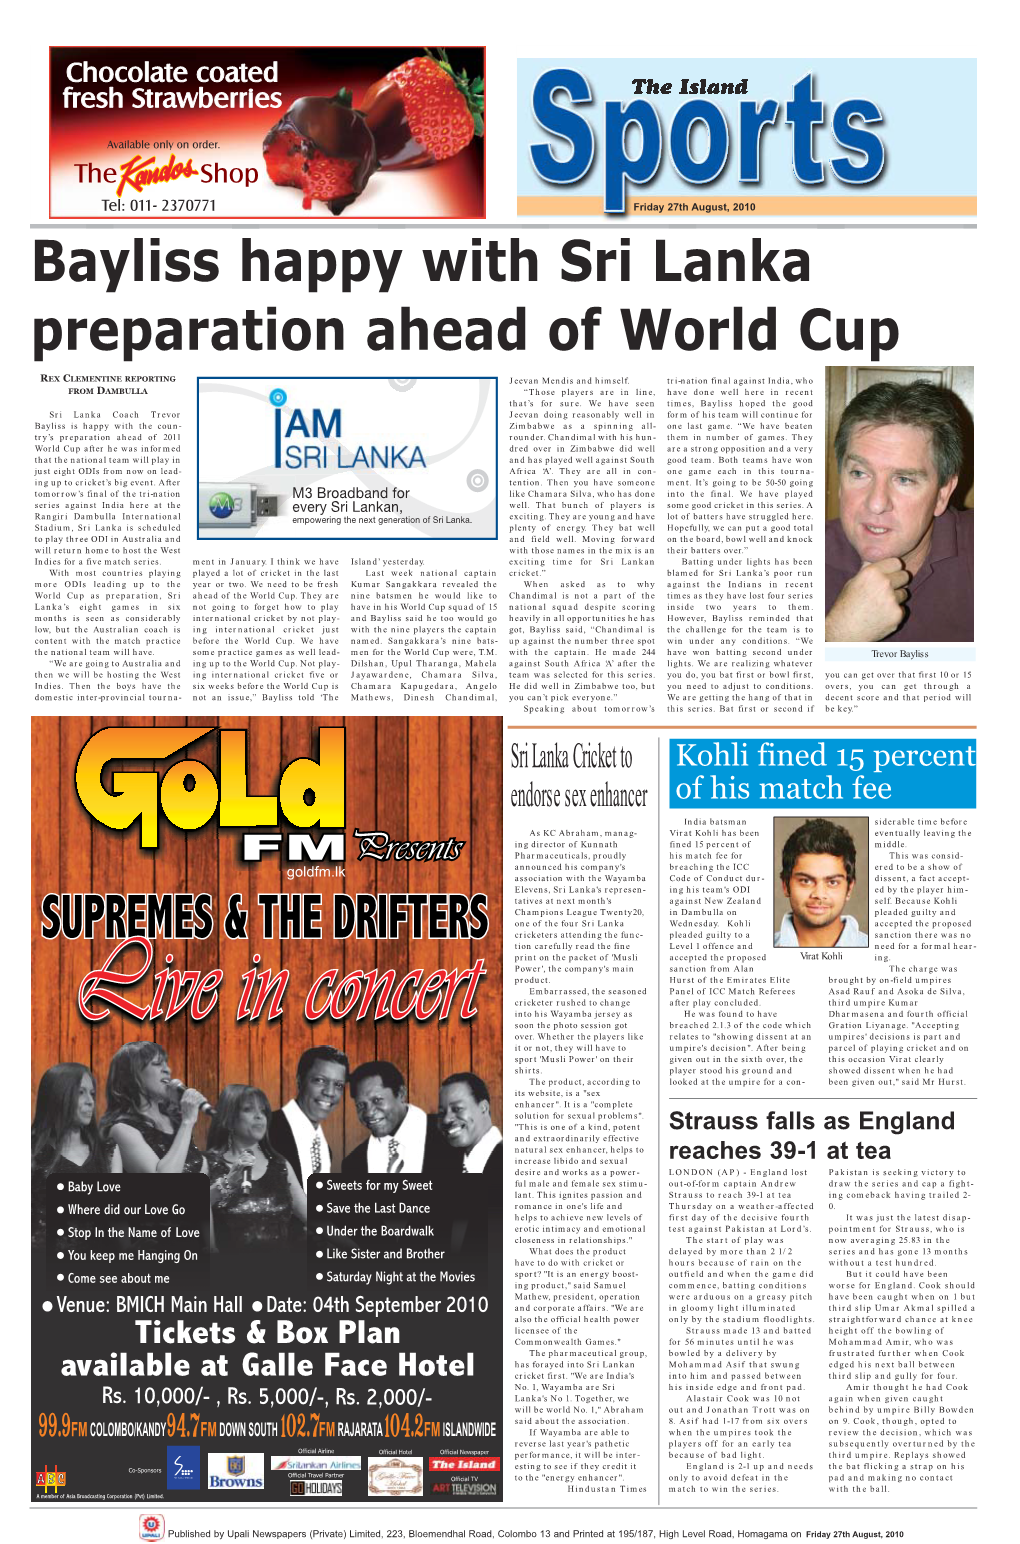 Bayliss Happy with Sri Lanka Preparation Ahead of World Cup